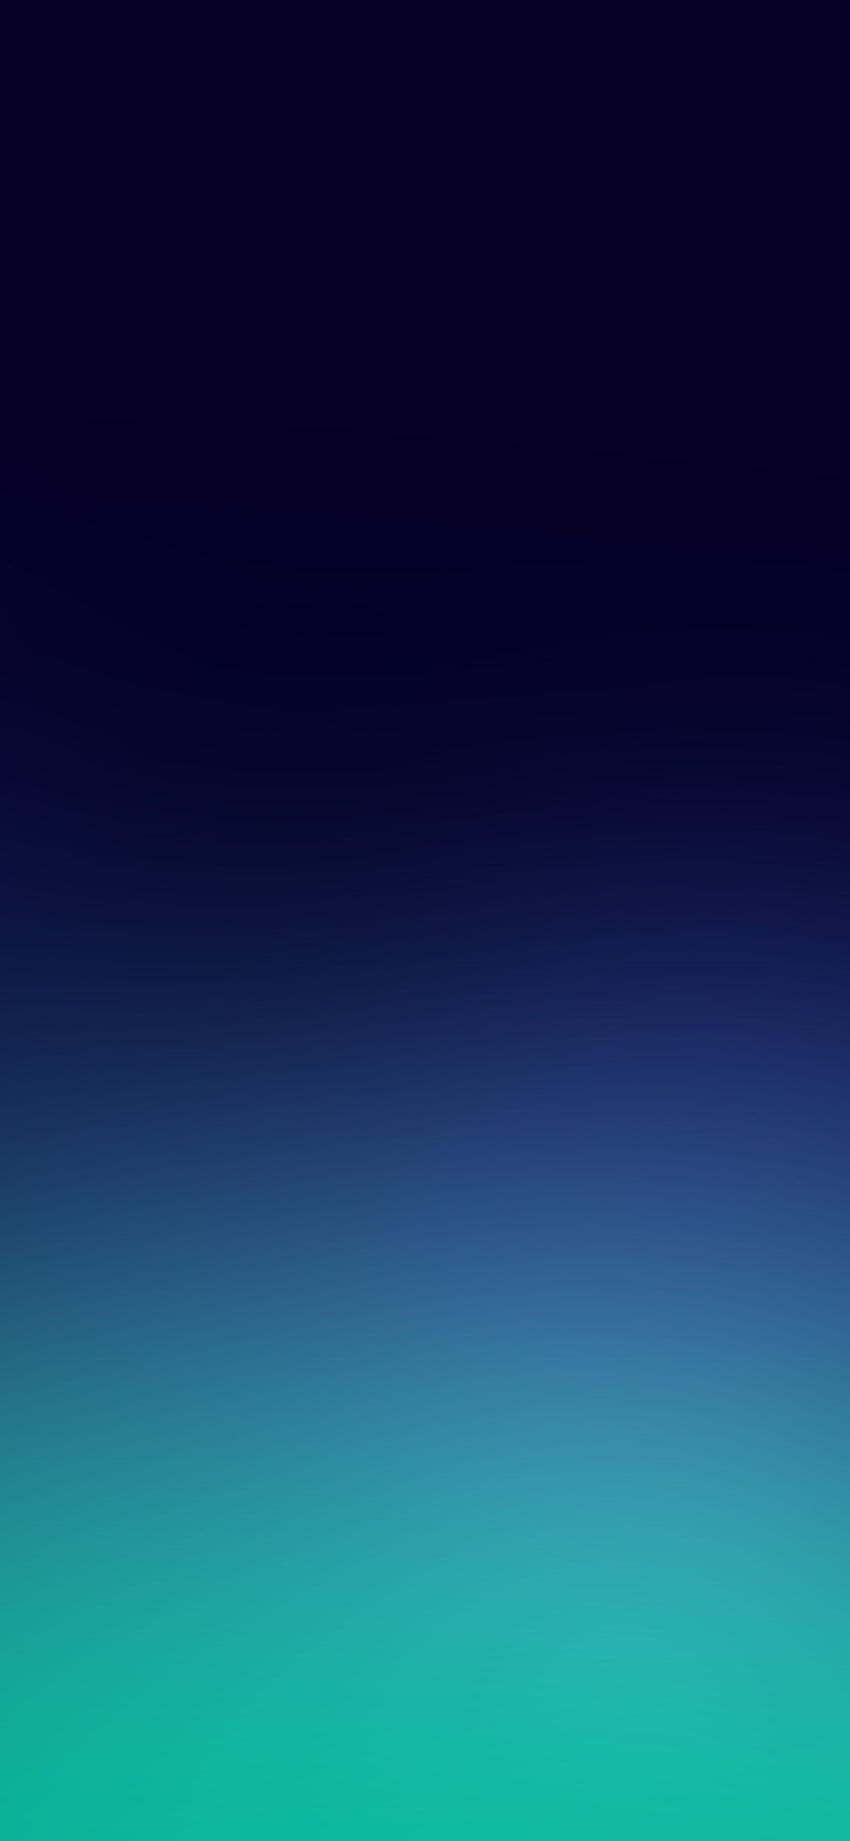 iPhoneX. gradación de desenfoque azul verde fondo de pantalla del teléfono